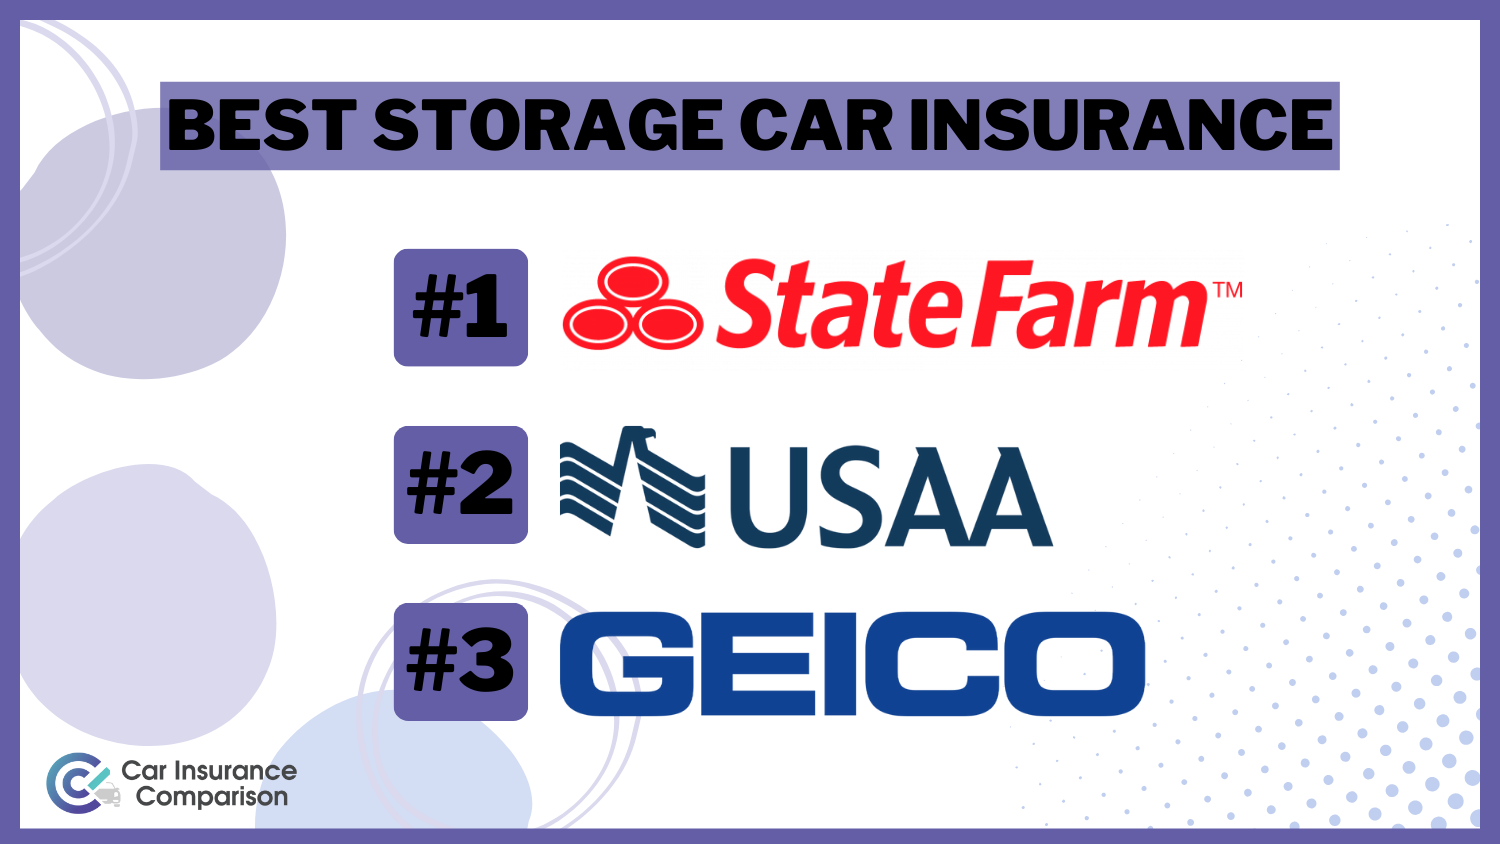 Best Storage Car Insurance: State Farm, USAA, Geico